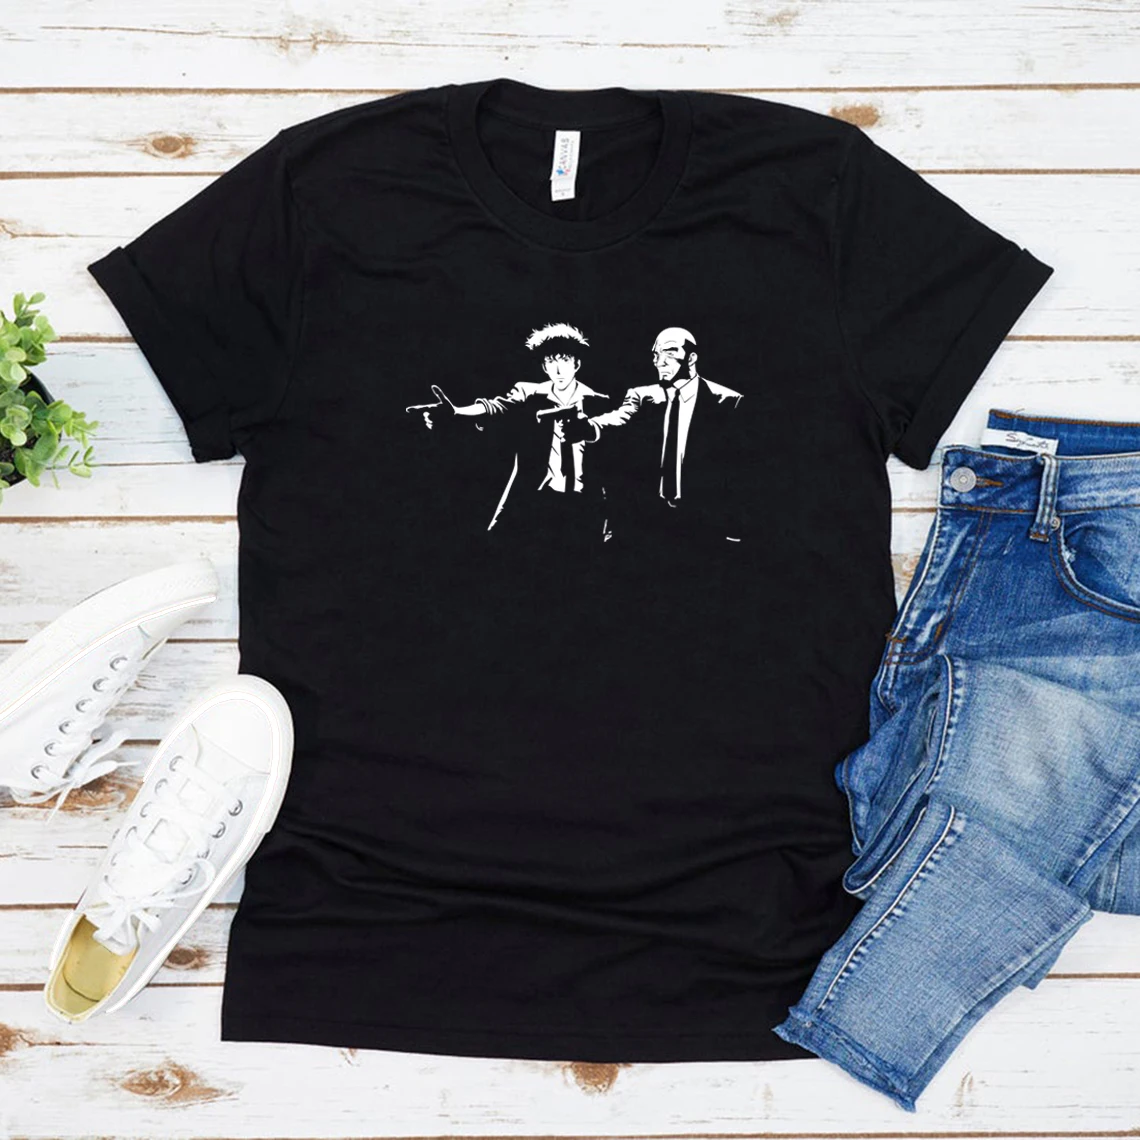 

Cowboy Bebop Pulp Fiction T Shirt Vintage Space Cowboy Shirt 90s Anime T-shirt Harajuku Graphic Tee Women Men Short Sleeve Tops